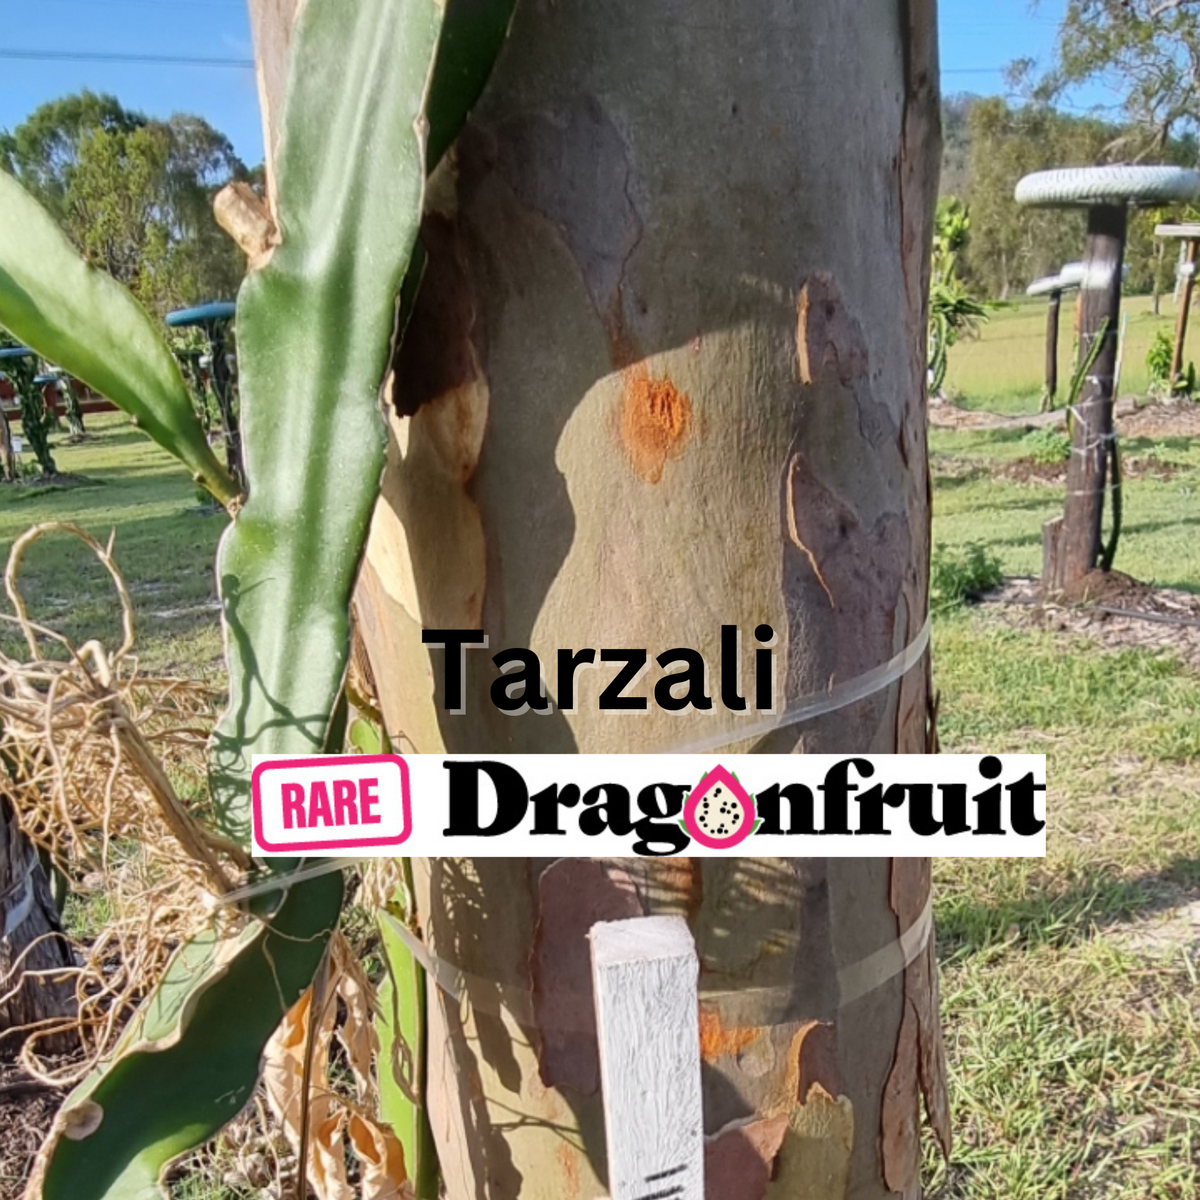 Tarzali Red dragon fruit - NOID